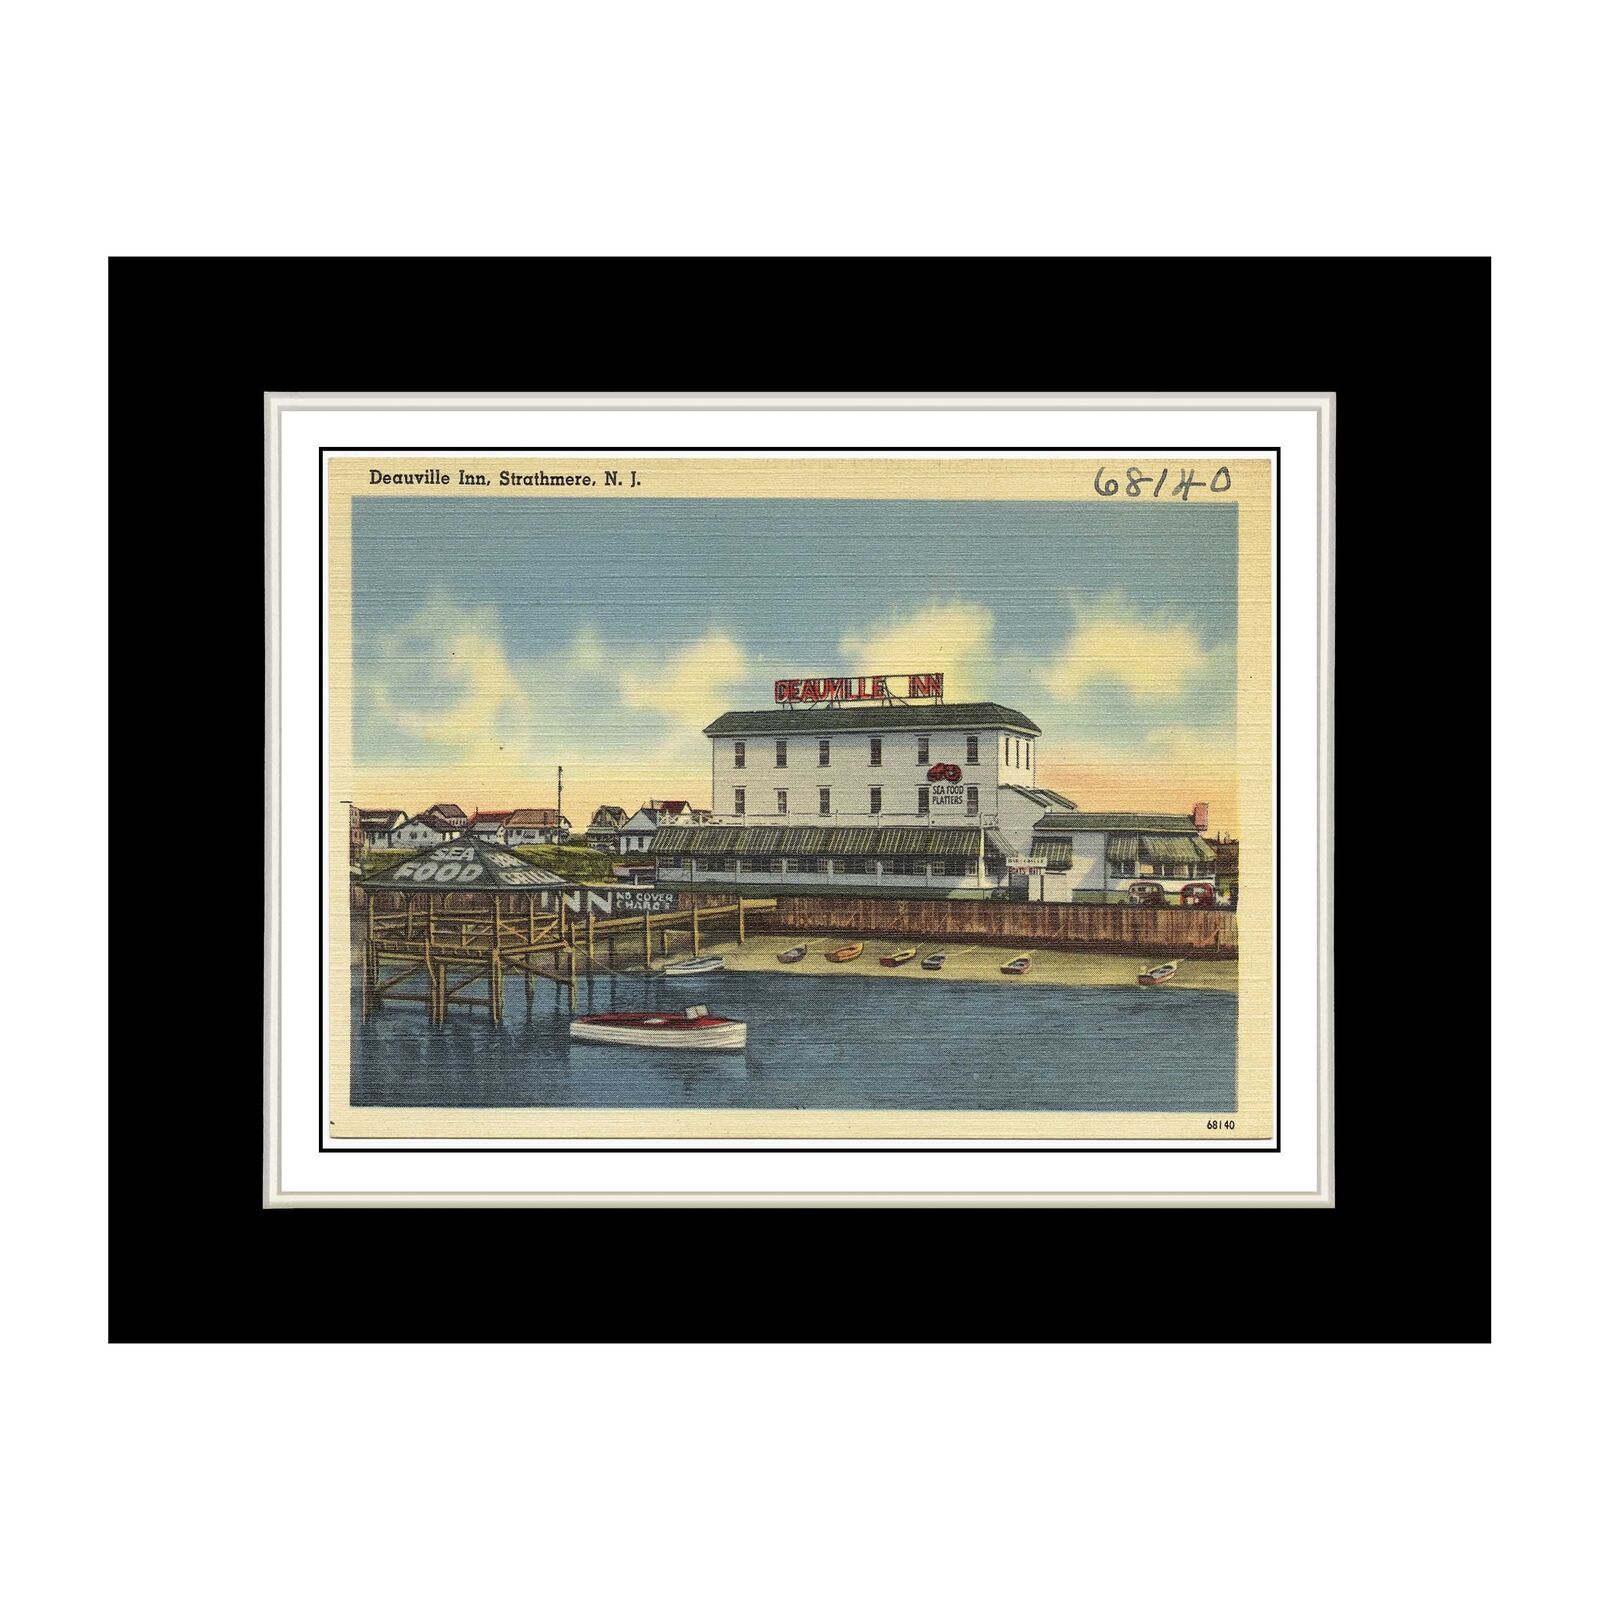 Art Print - New Jersey Postcard - Deauville Inn, Strathmore, N. J.